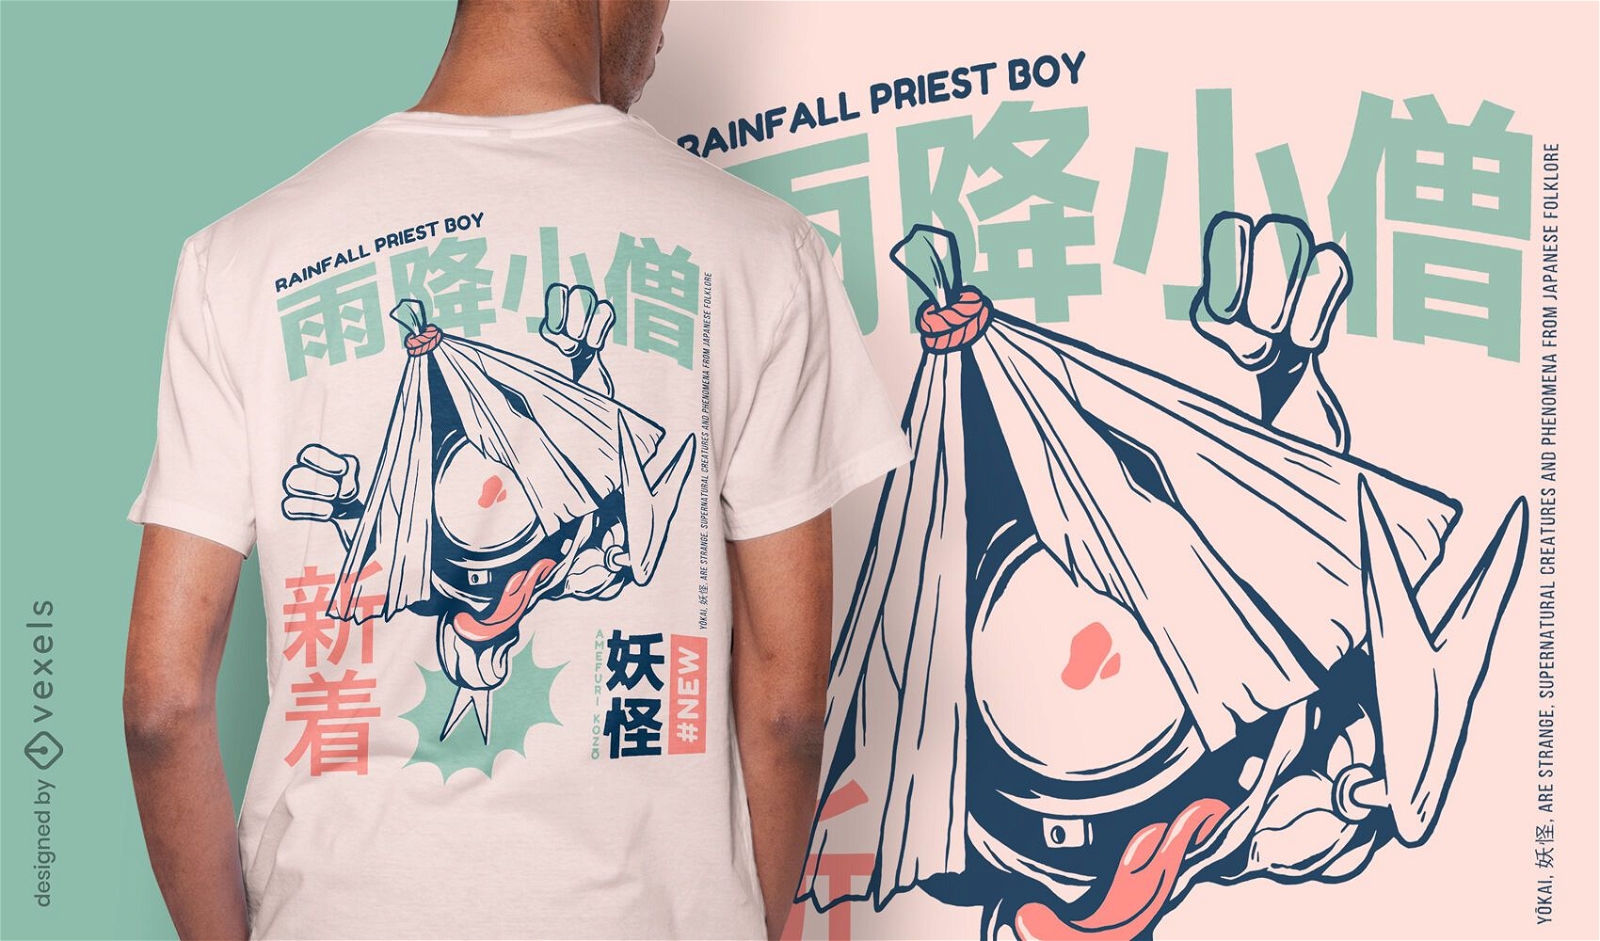 Amefuri-kozo japanisches Yokai T-Shirt Design